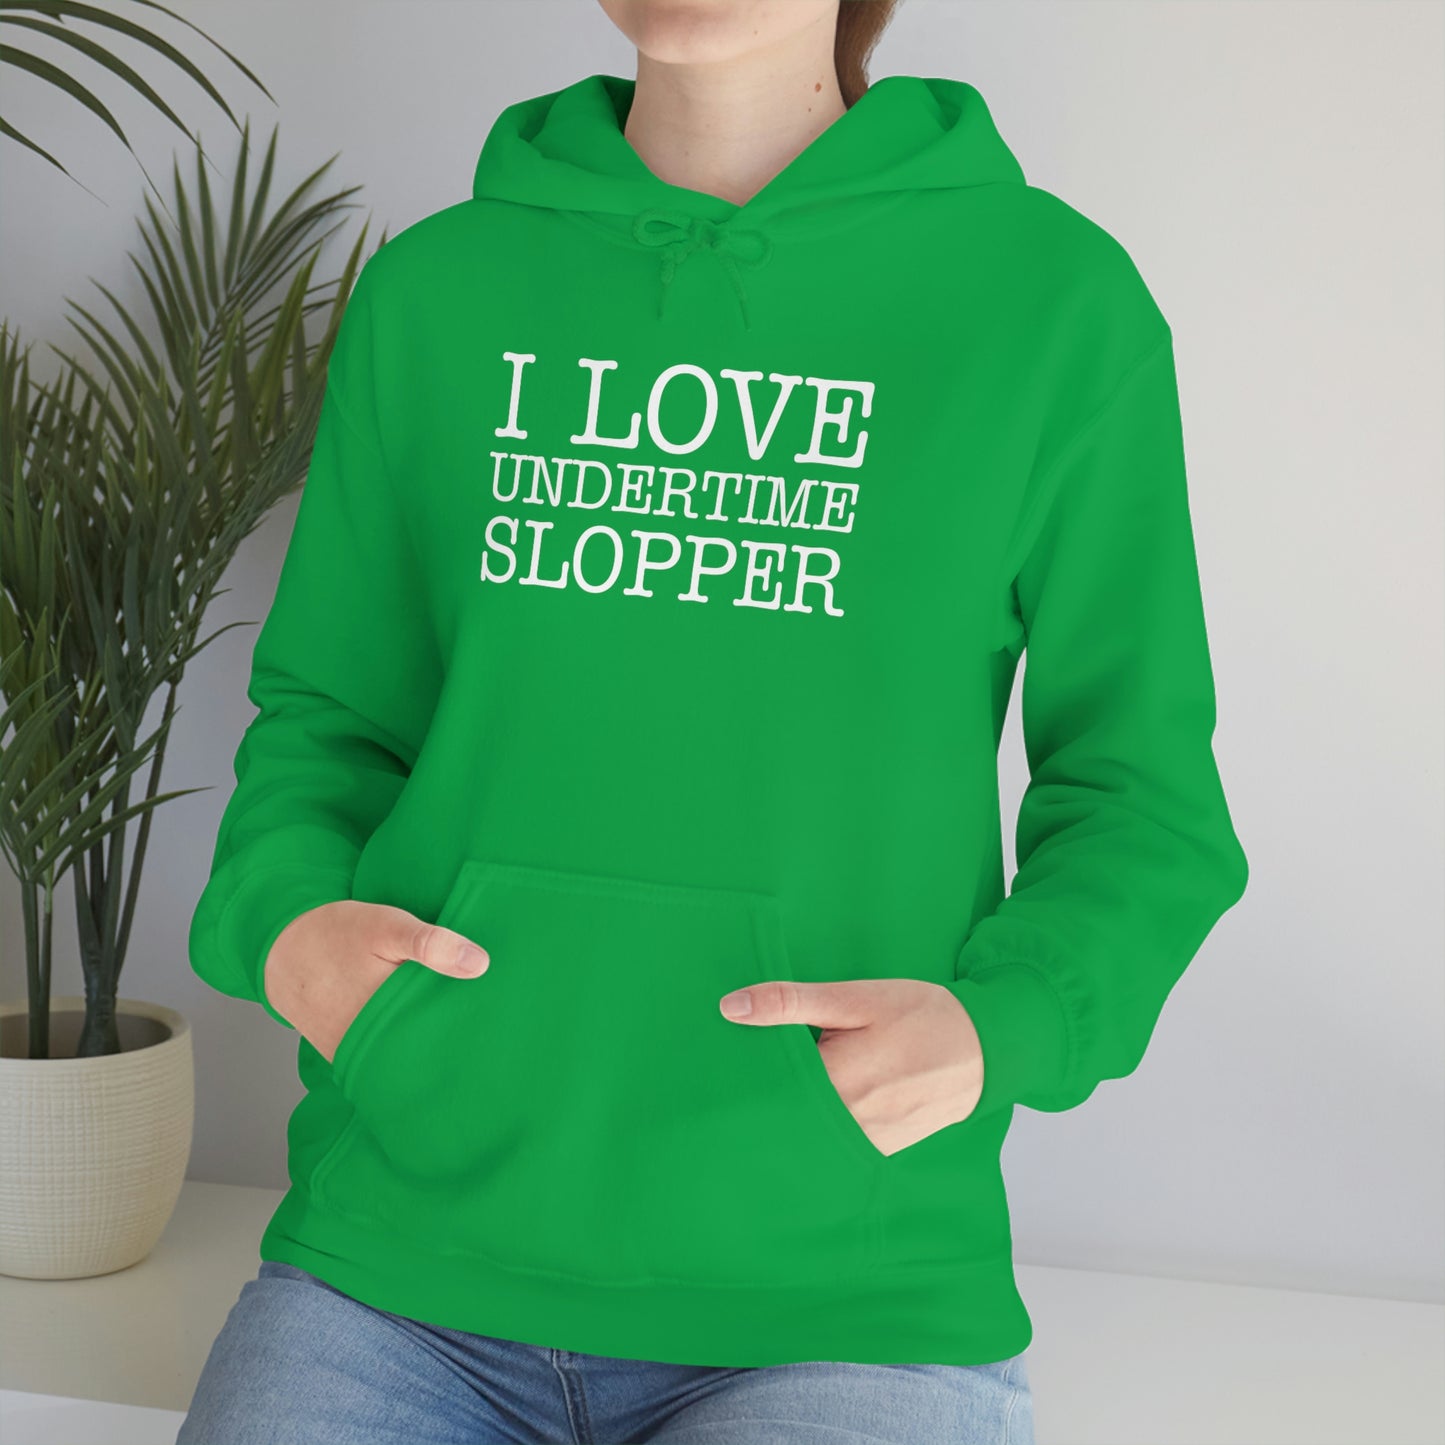 I love Undertime Slopper (White Text) Hoodie | Official Undertime Slopper Hoodie